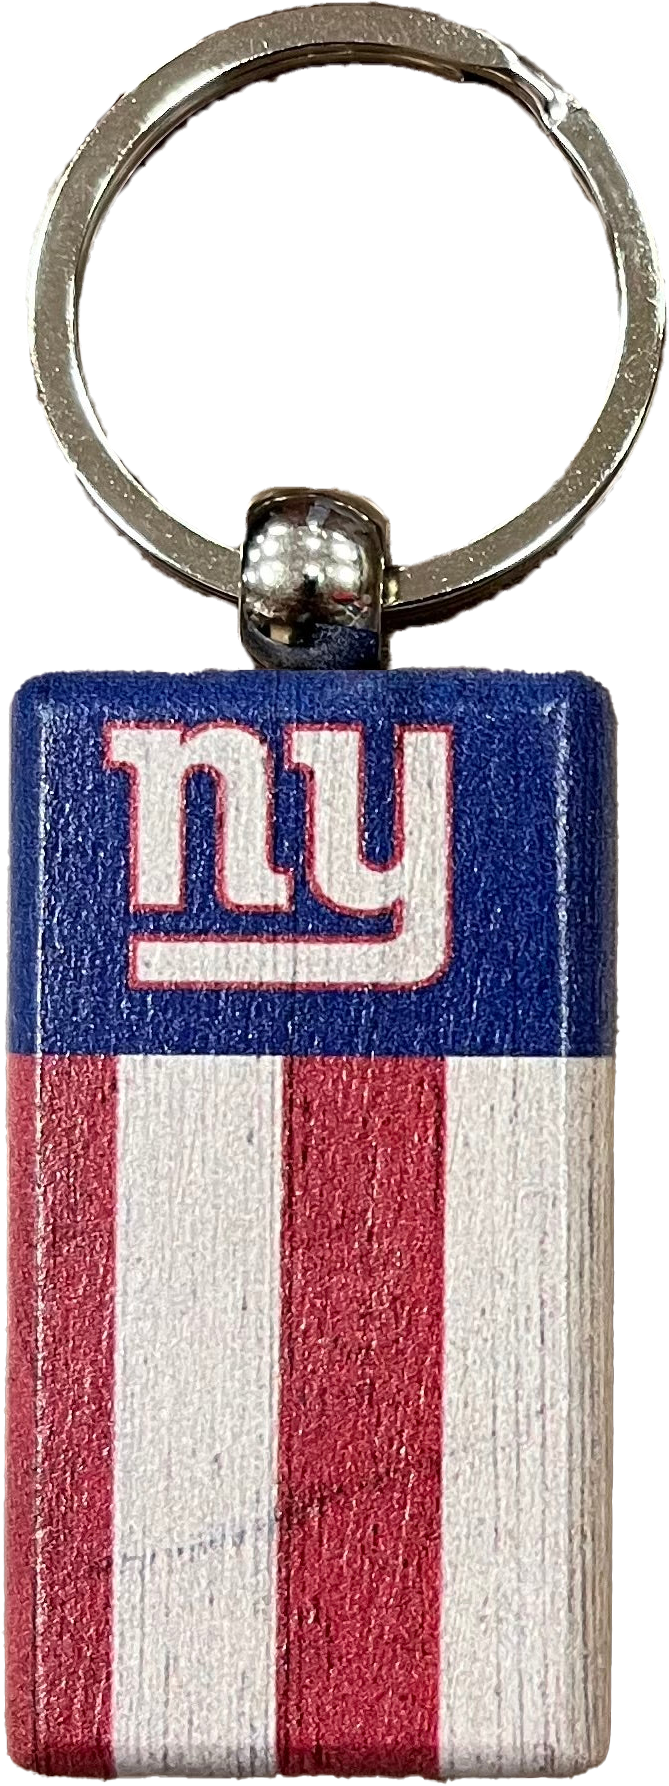 New York Giants Rectangle Flag Keychain - Dynasty Sports & Framing 